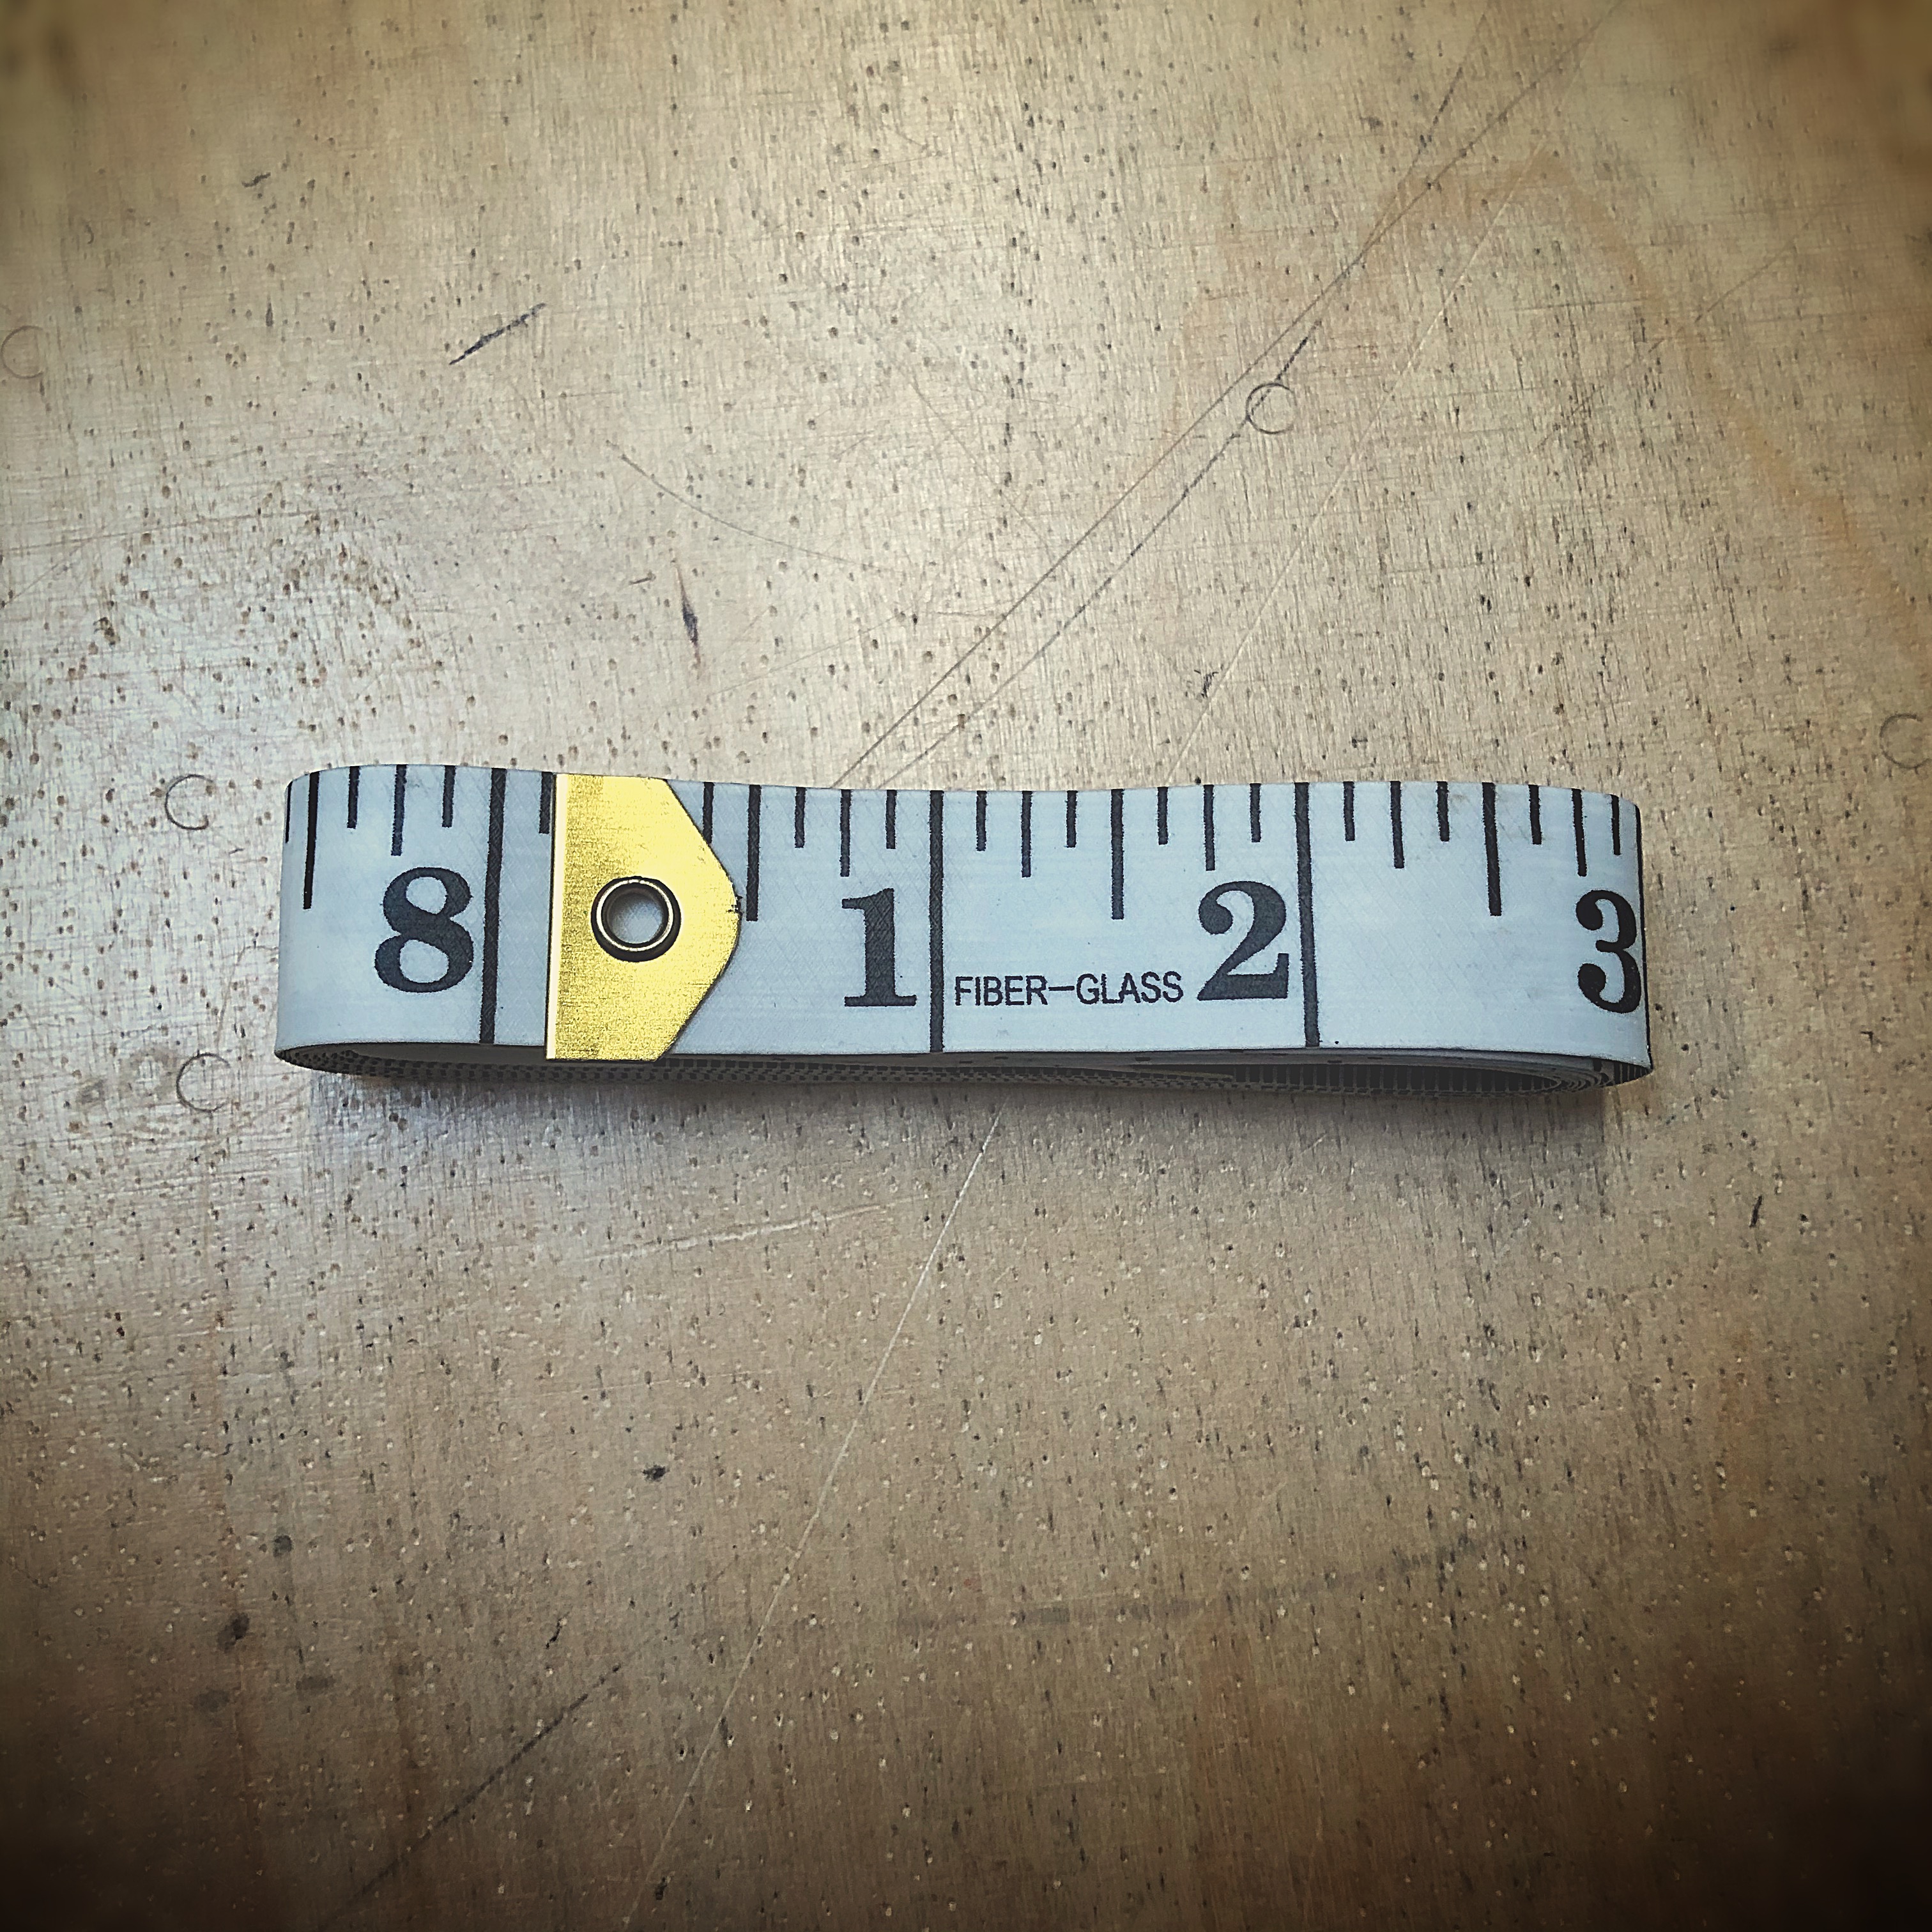 Tailors Tape Measure